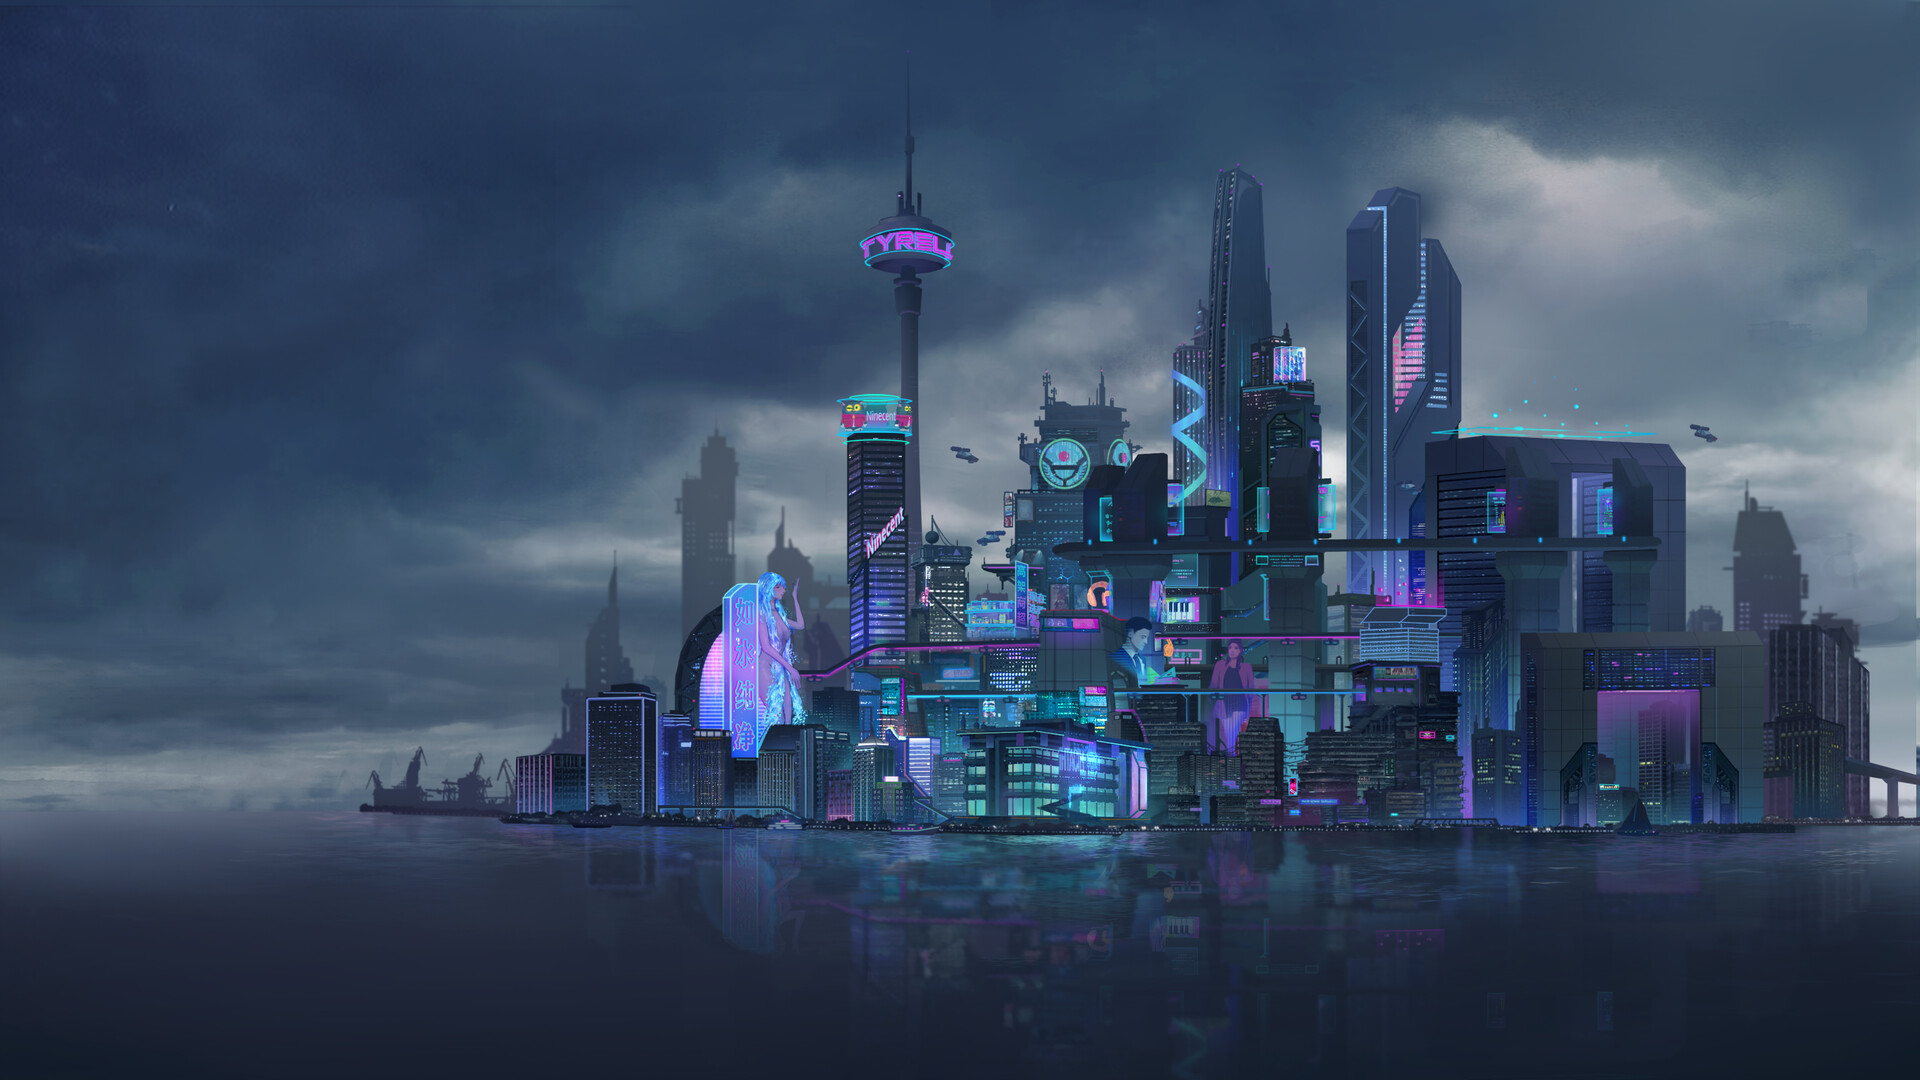 Digital Art Fantasy Art Environment Landscape Fantasy City Science Fiction Cyberpunk Z 4 Zero 1920x1080